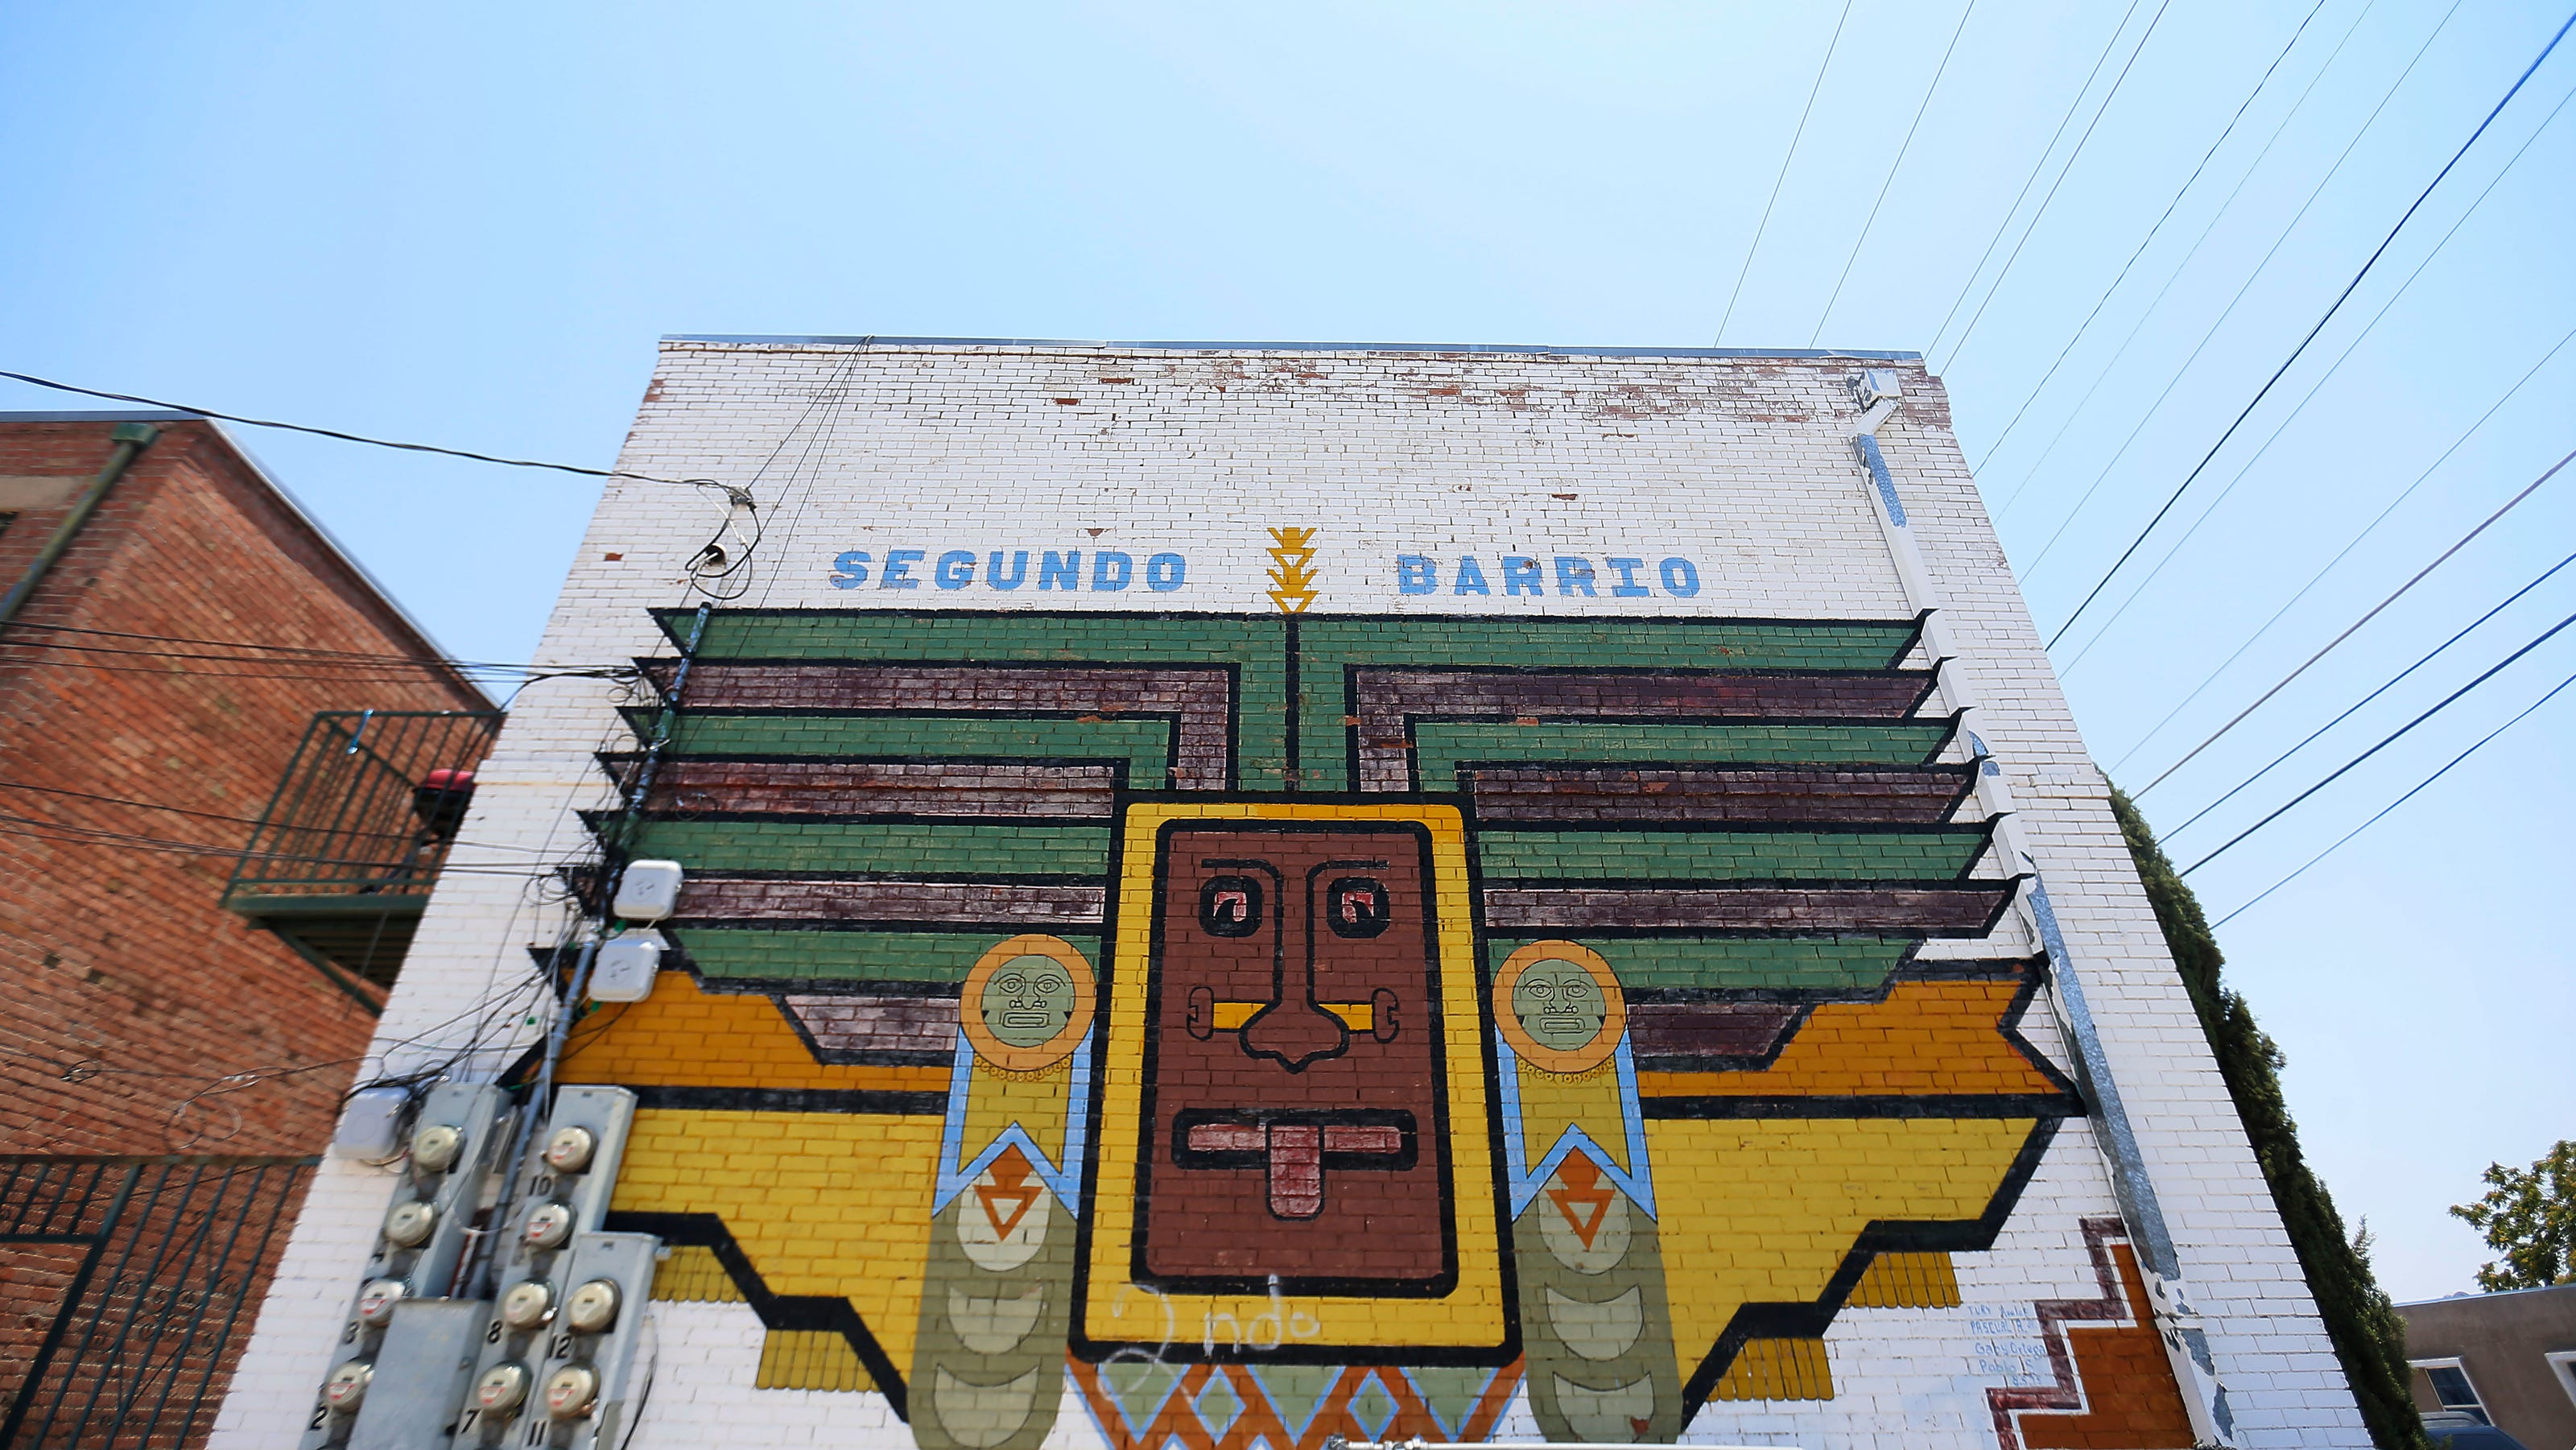 National historic district honor sought for El Paso's Segundo Barrio